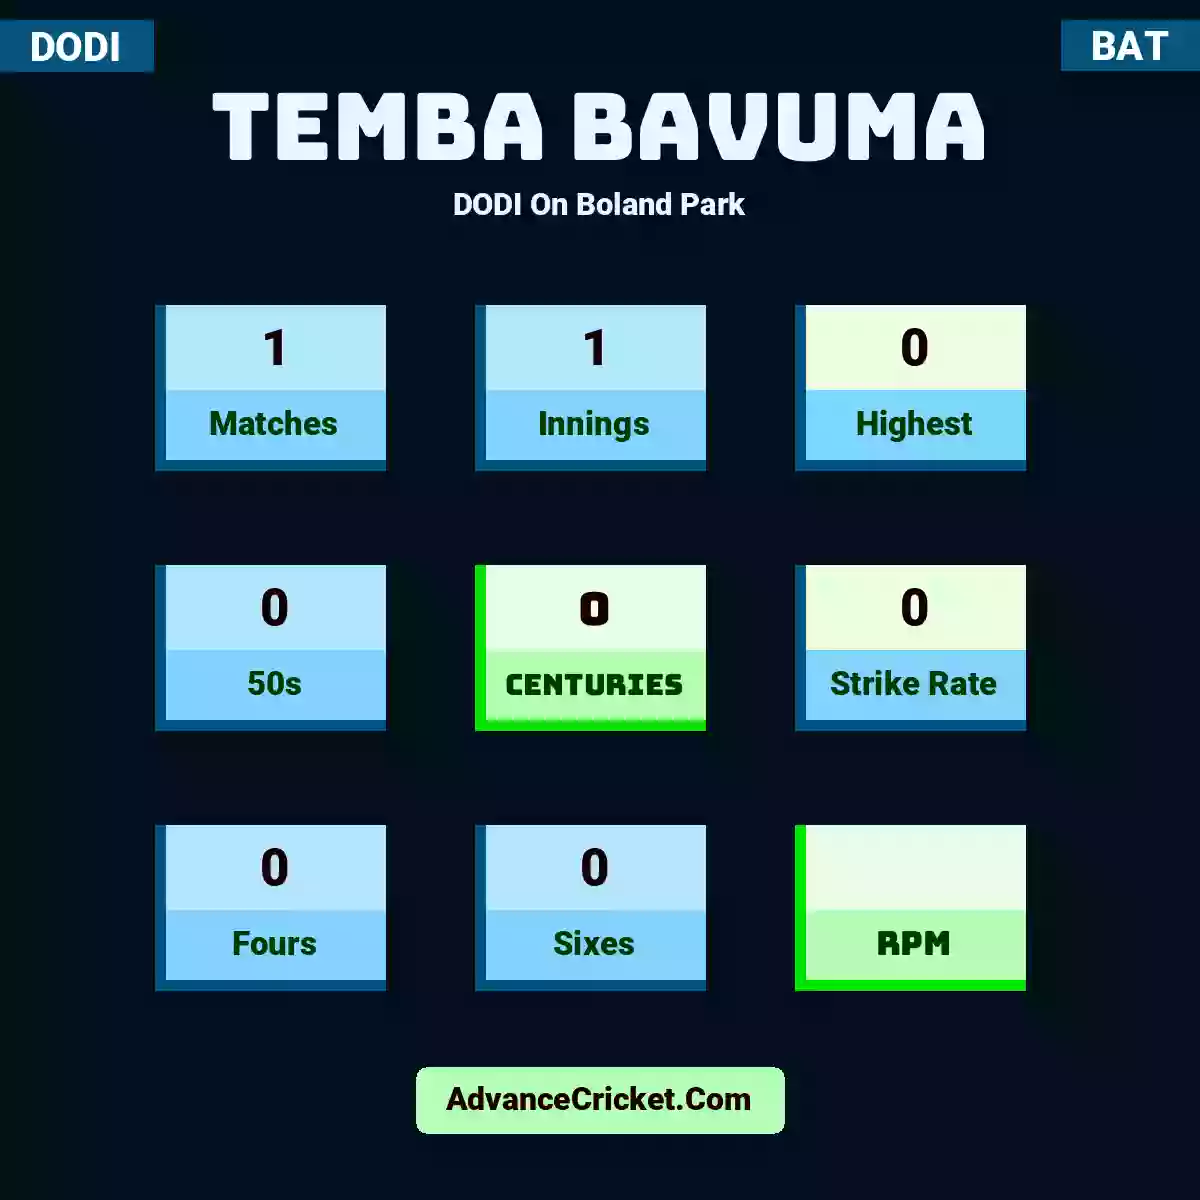 Temba Bavuma DODI  On Boland Park, Temba Bavuma played 1 matches, scored 0 runs as highest, 0 half-centuries, and 0 centuries, with a strike rate of 0. T.Bavuma hit 0 fours and 0 sixes.